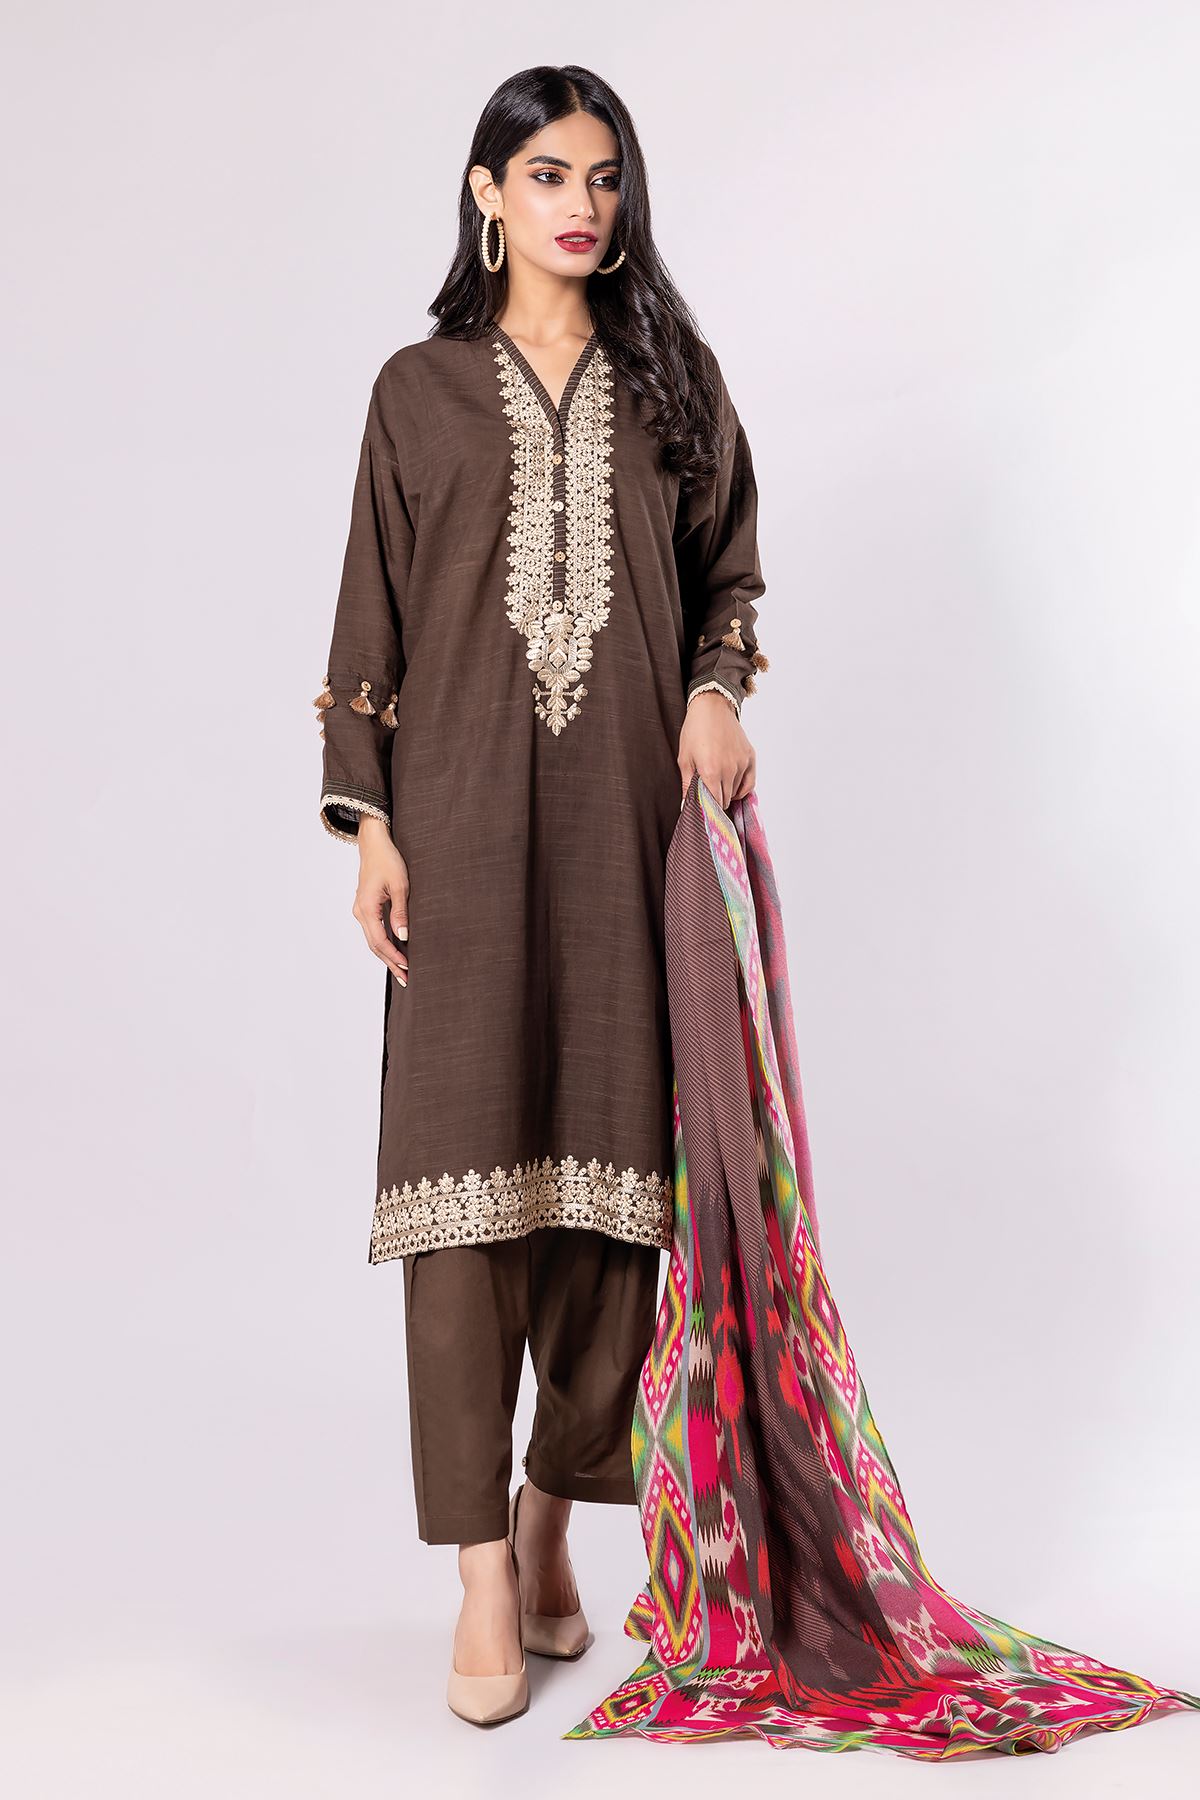 Buy Fabrics 3 Piece Suit | 12.60 USD | 1001734613 | Khaadi Global